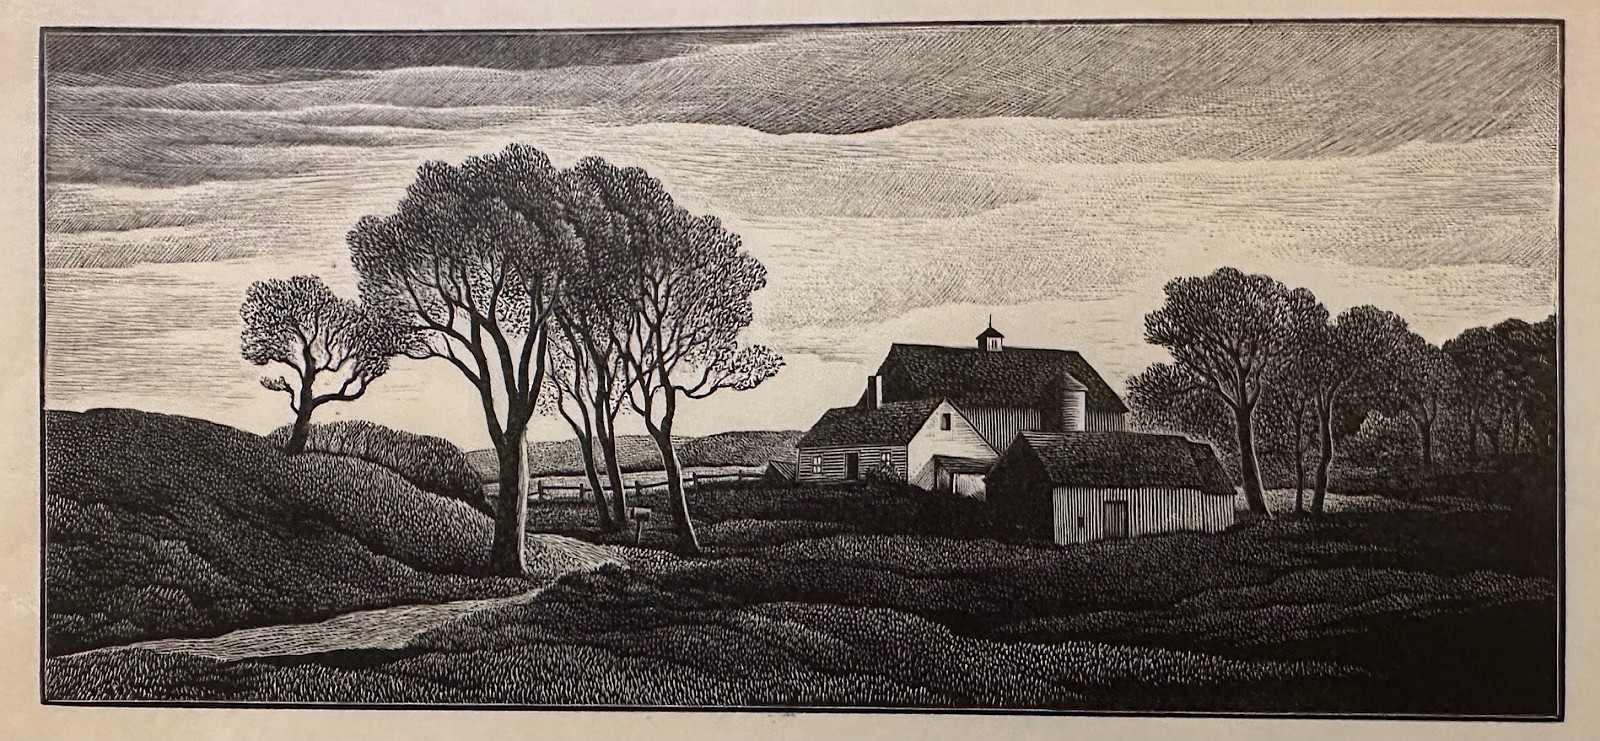 Thomas Willoughby Nason, The Lonely Farm, 1946
wood engraving, 3 5/8"" x 8""
JCA 6777.04
$950